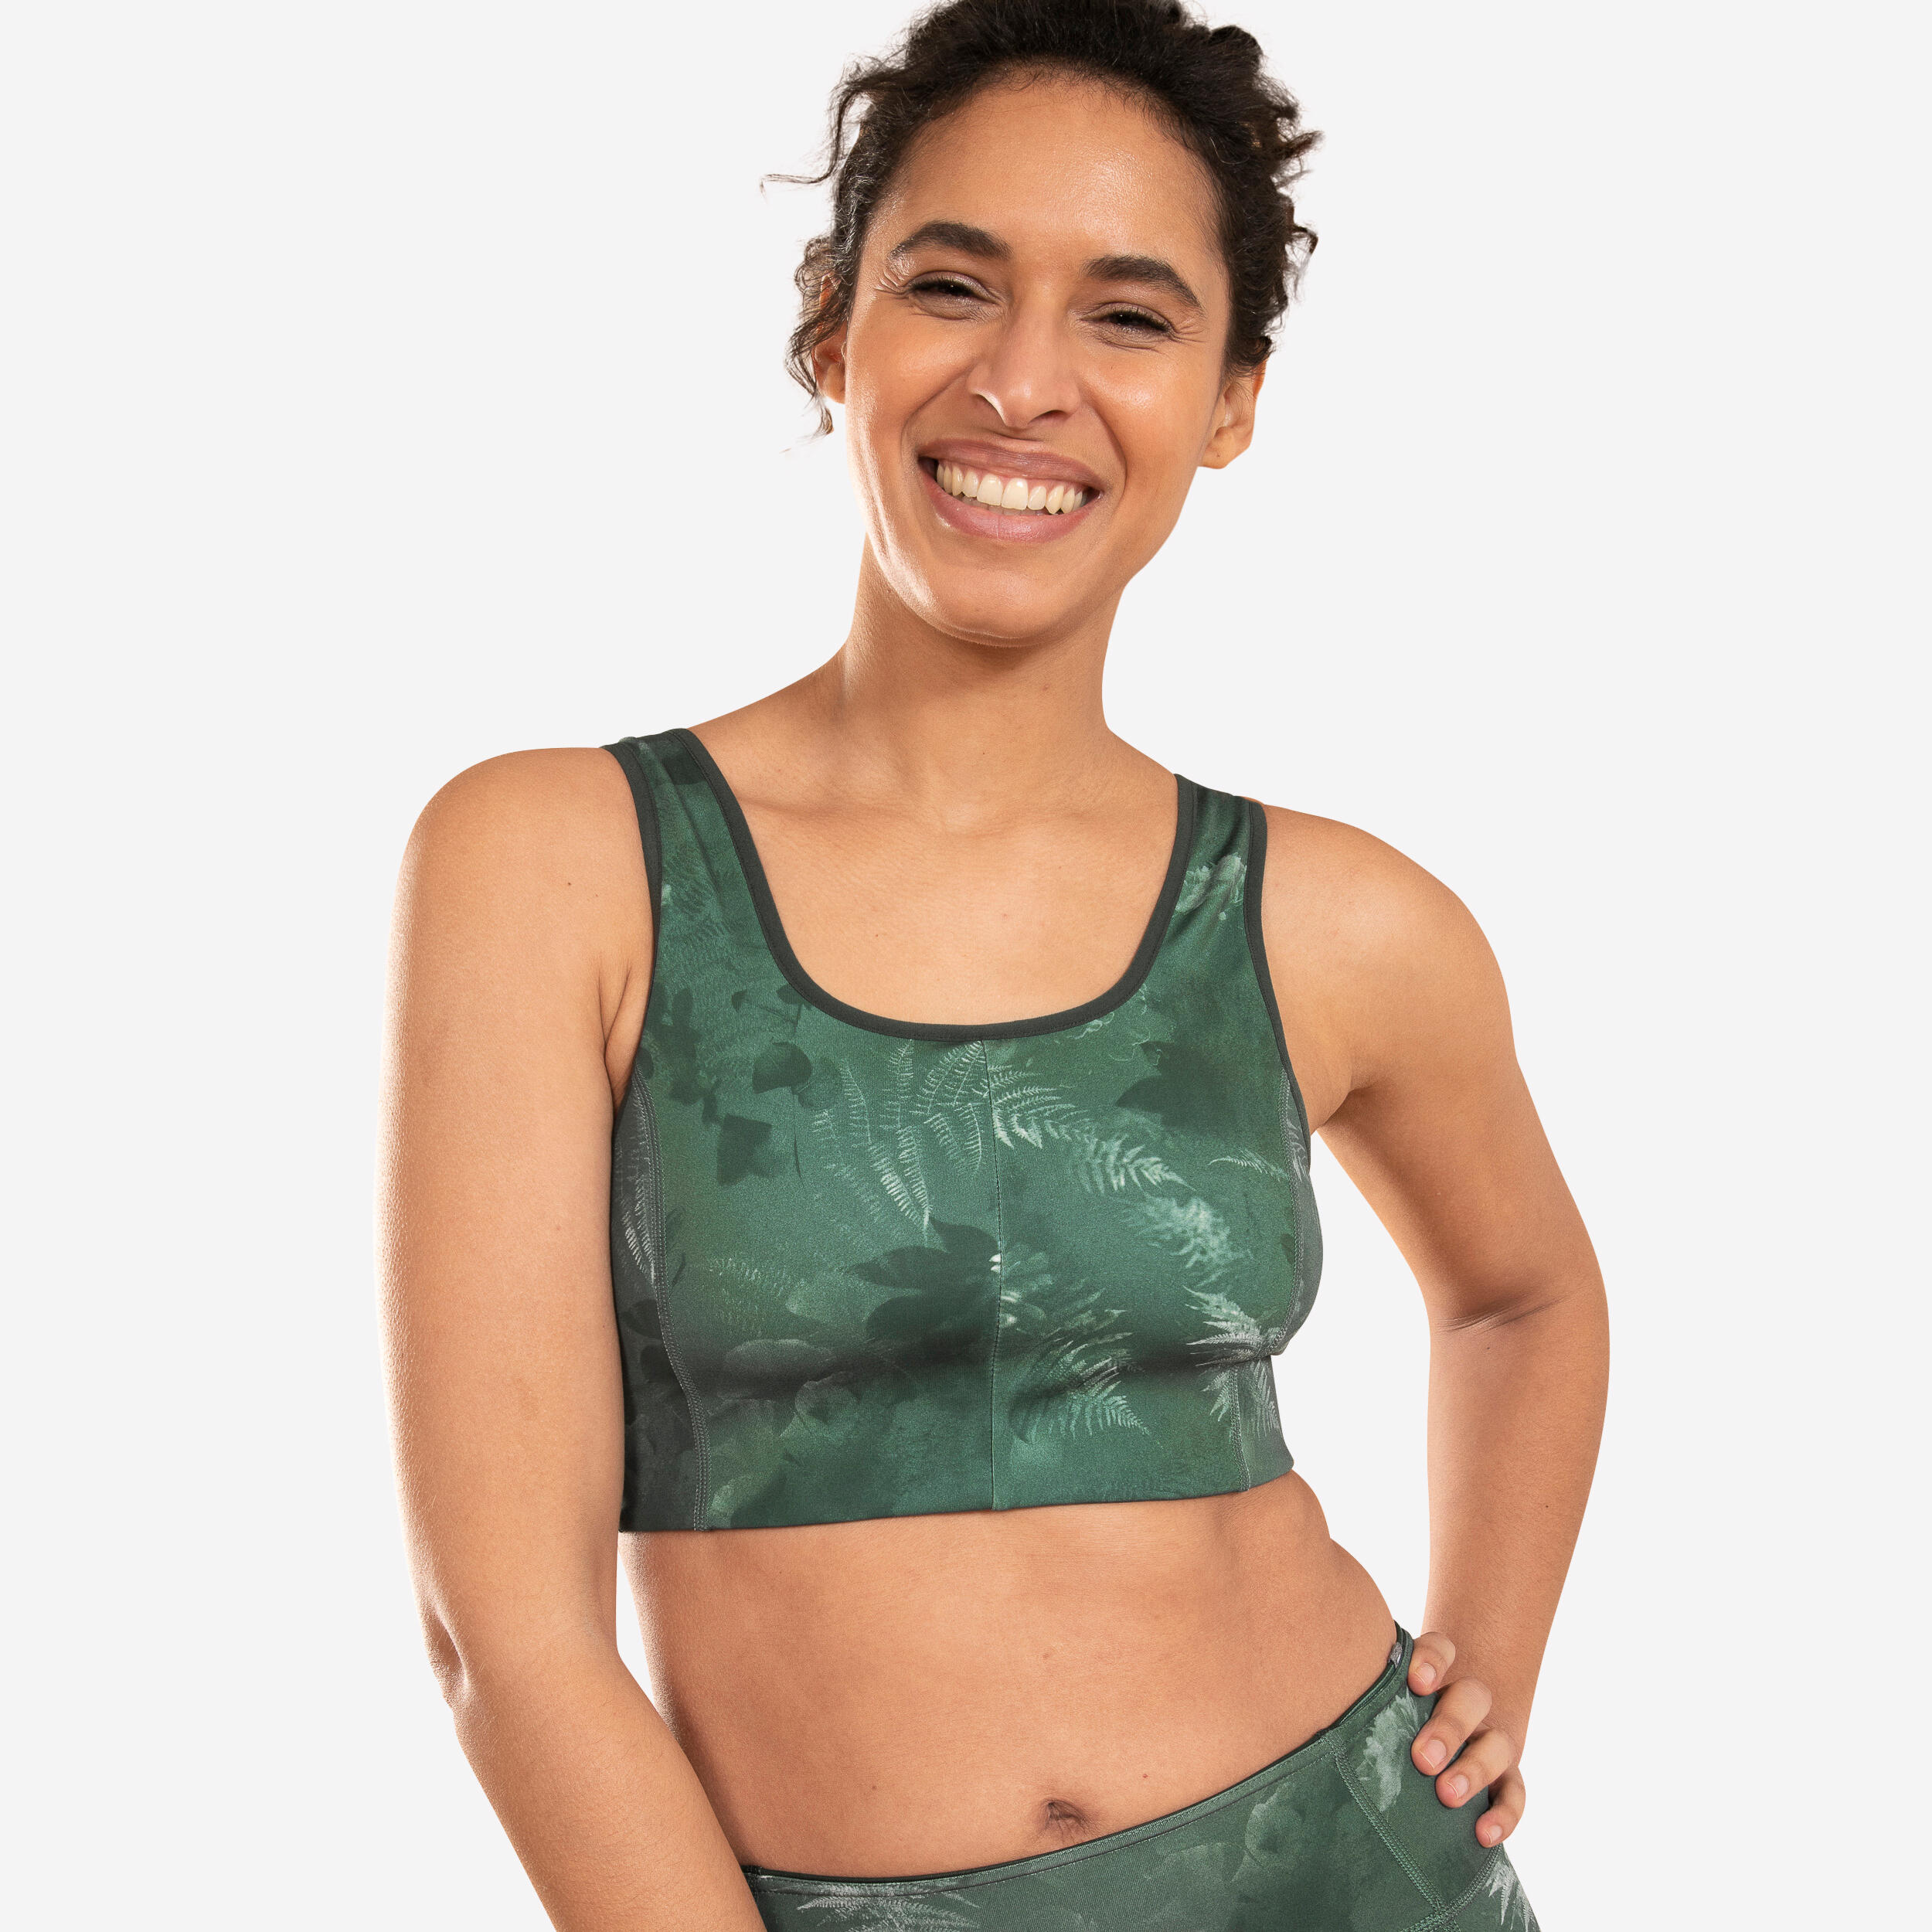 KIMJALY Yoga Reversible Sports Bra - Solid/Print Green